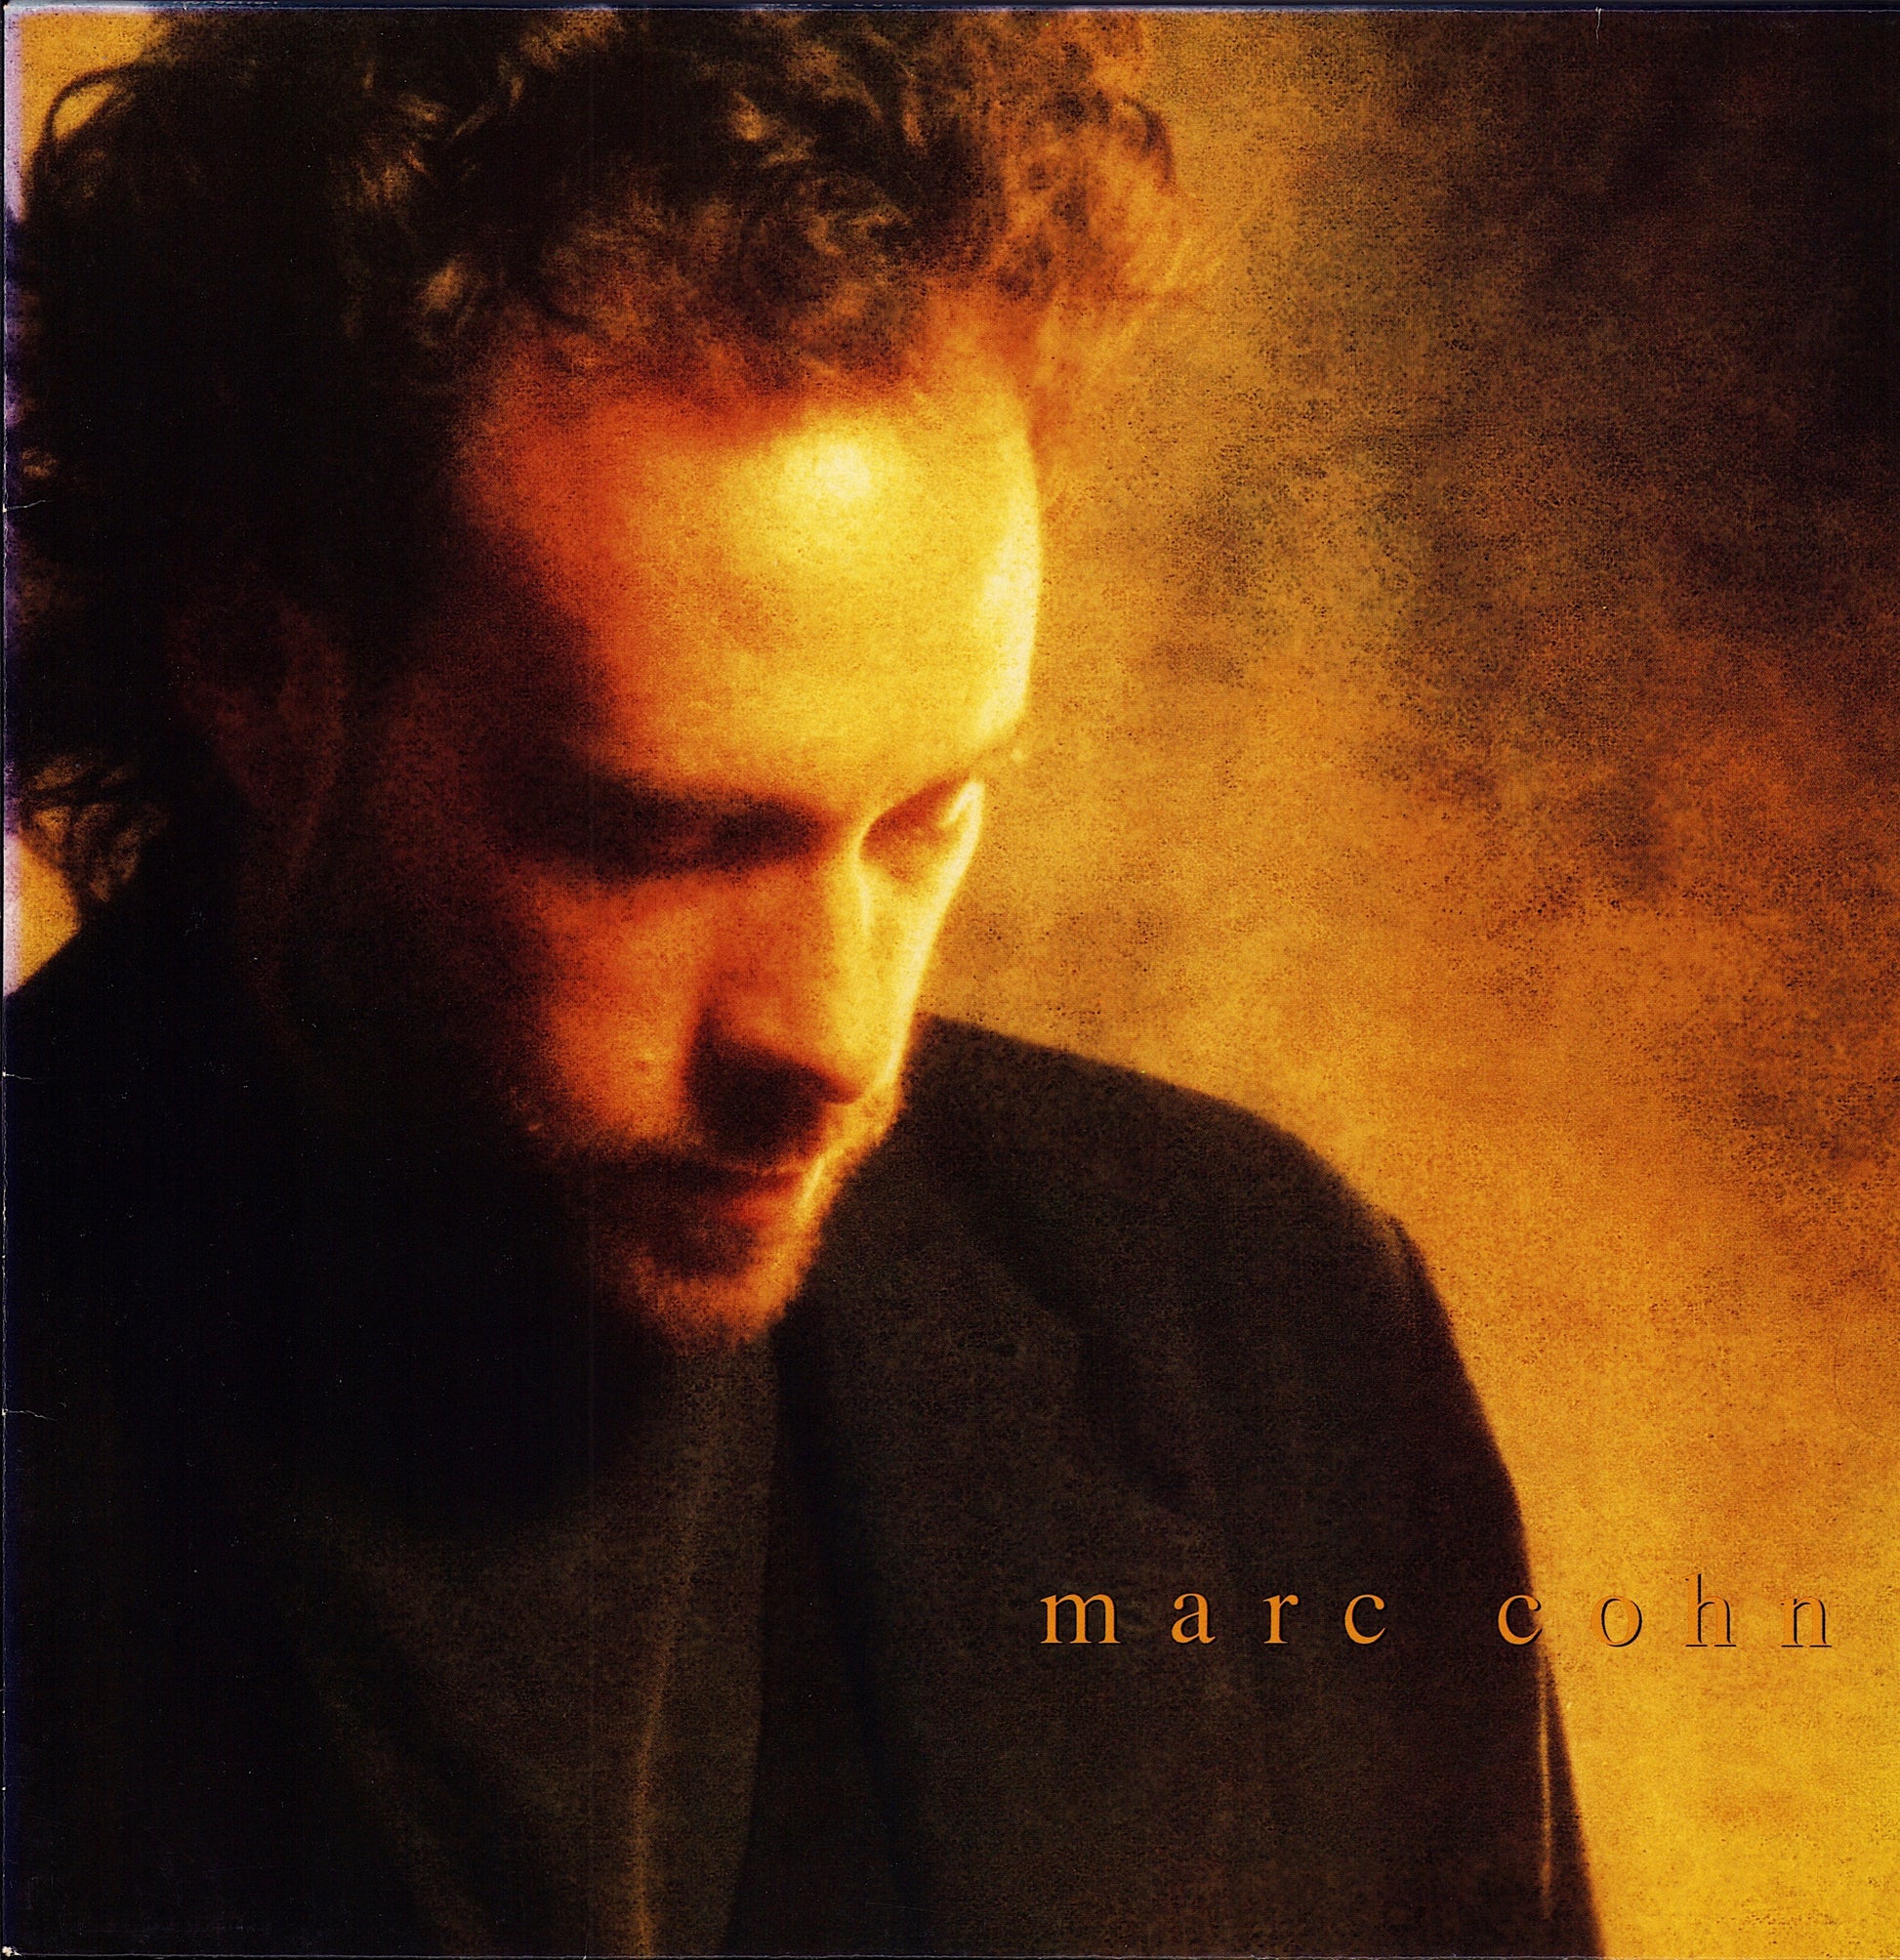 Marc Cohn - Marc Cohn Vinyl LP